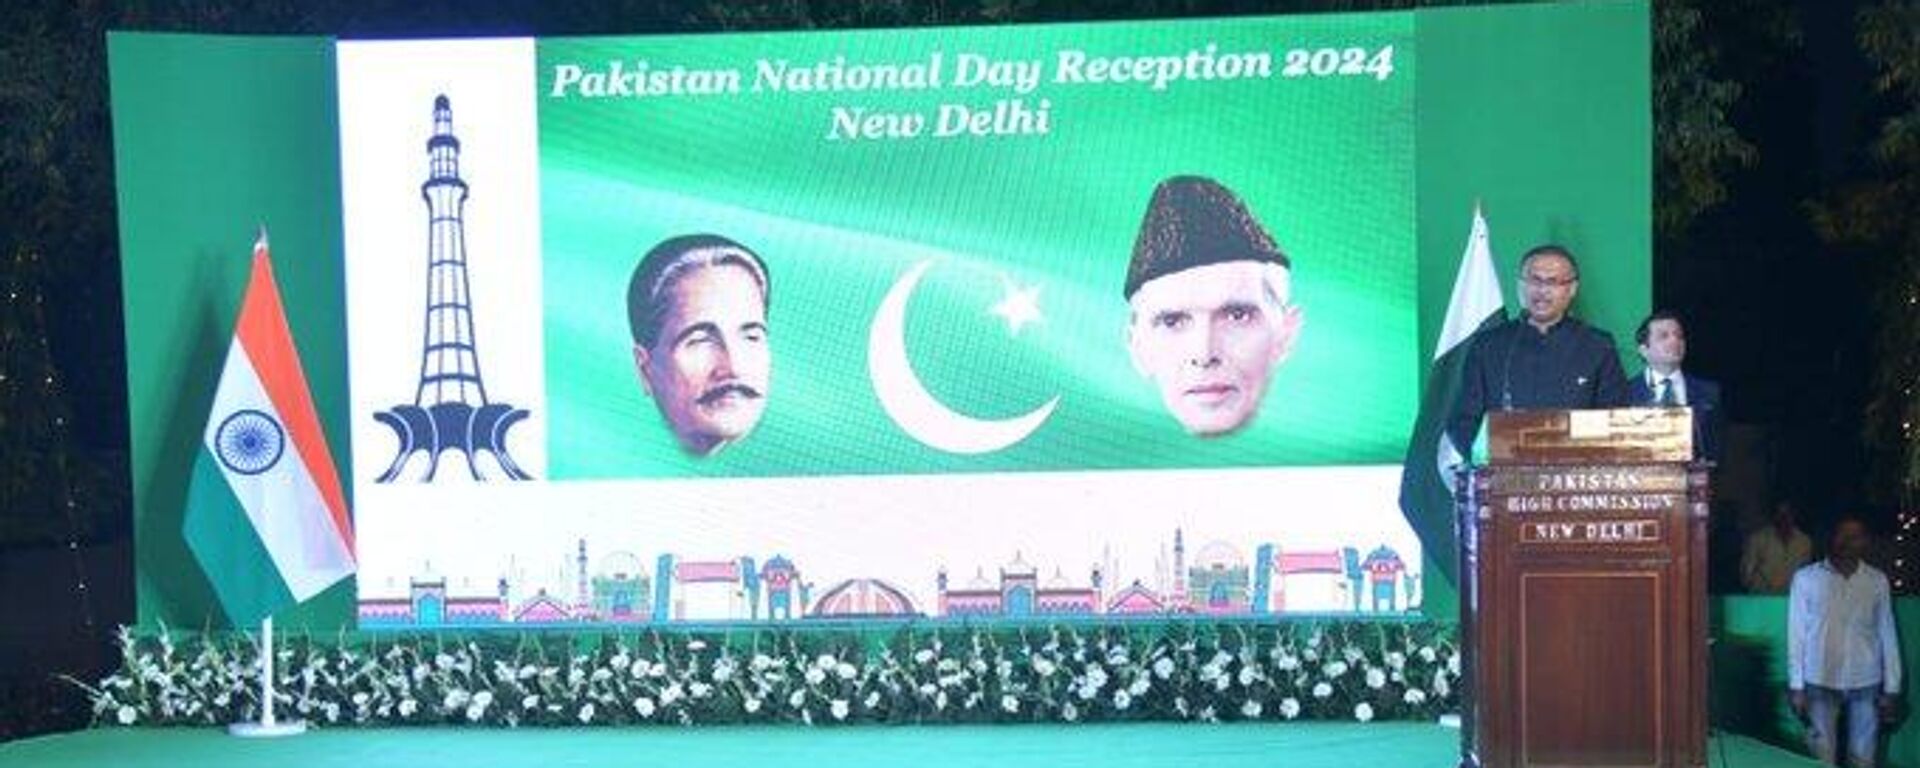 Pakistan National Day Reception 2024 New Delhi - Sputnik India, 1920, 29.03.2024